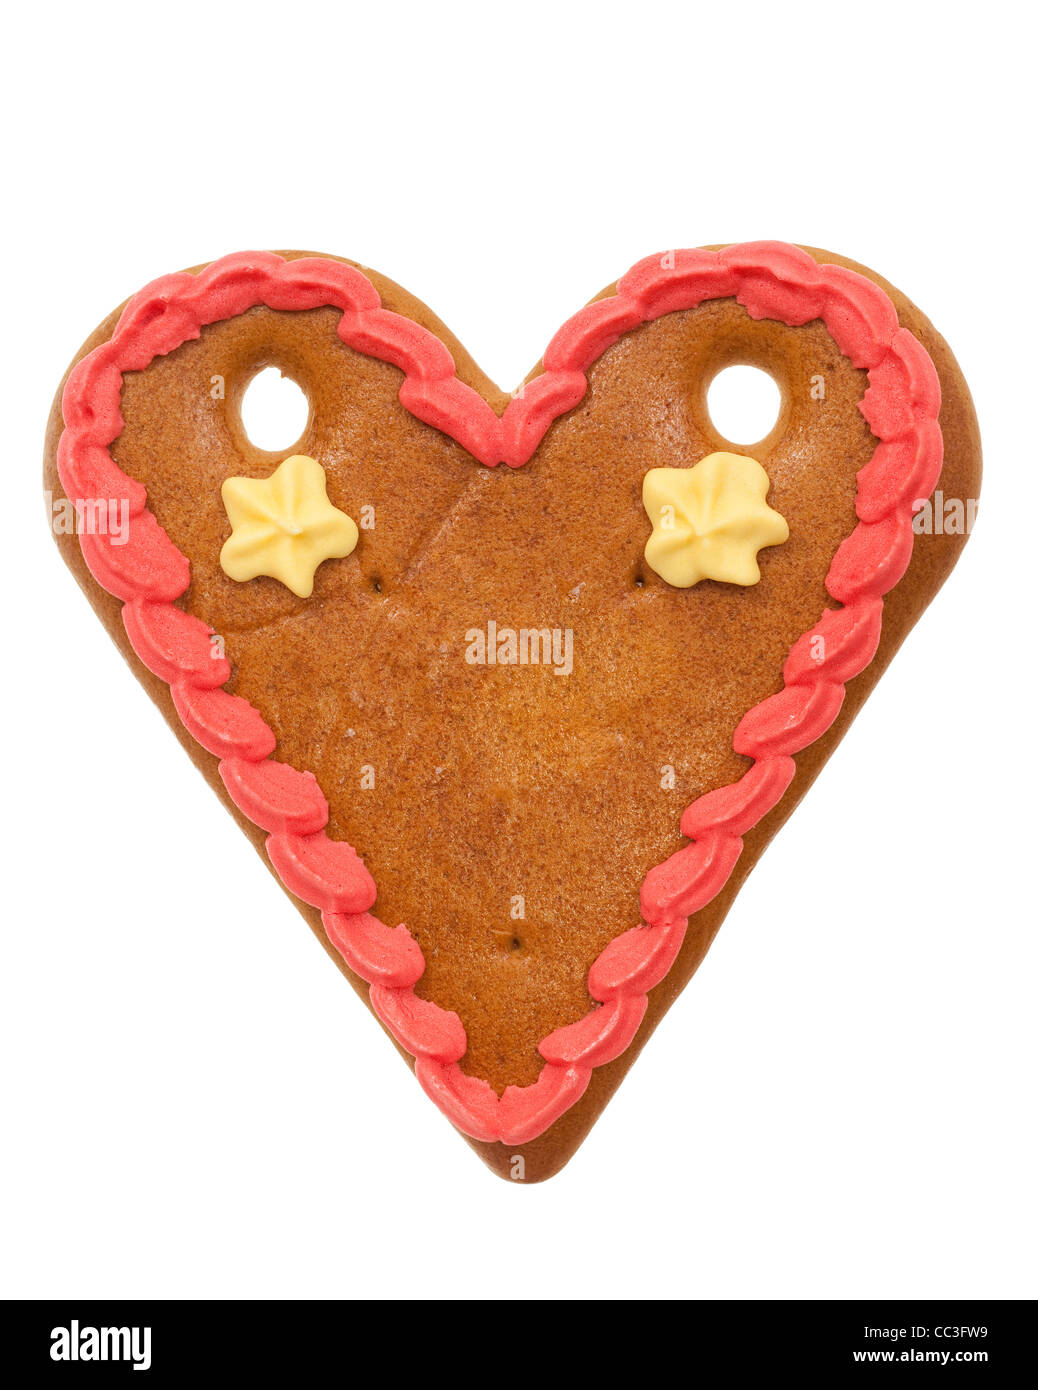 Gran corazón con pan de jengibre decorado colorido de azúcar glas Foto de stock